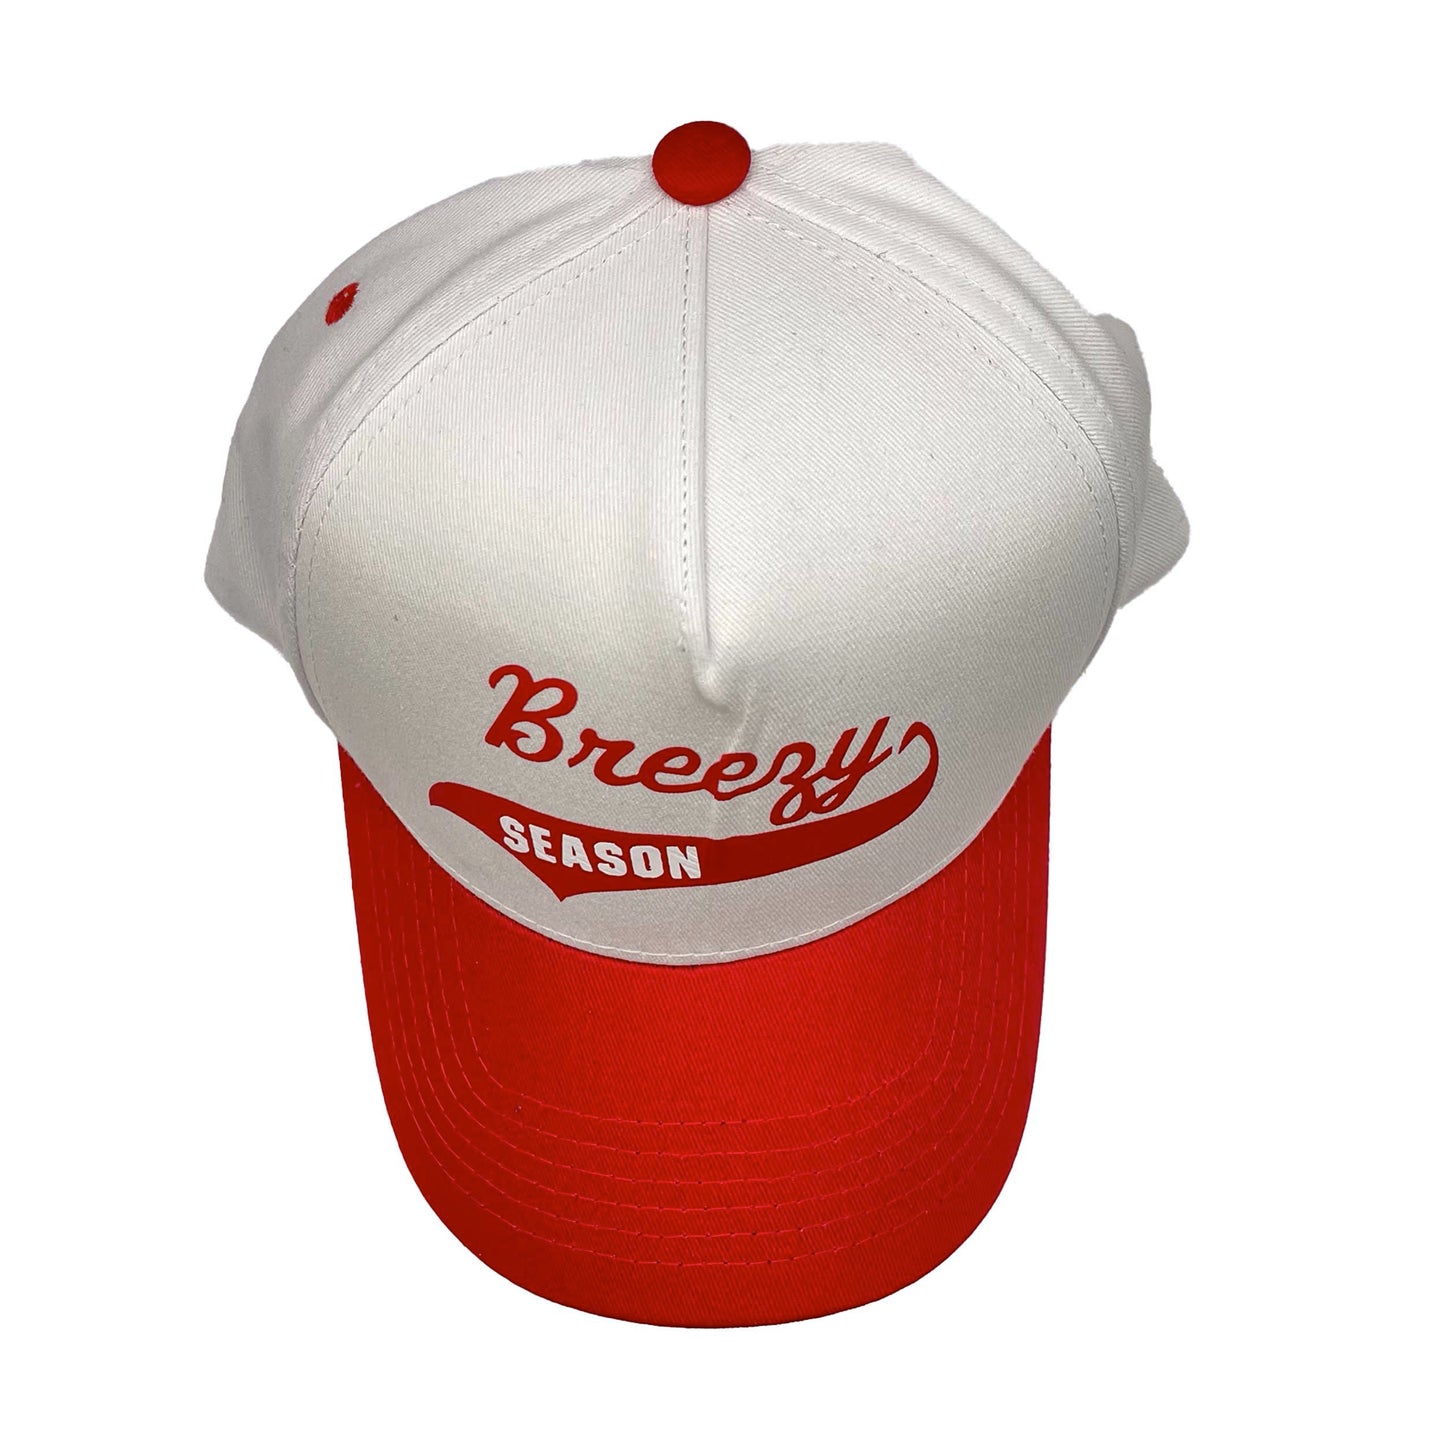 White/Red Trucker Hat - Breezy Season 